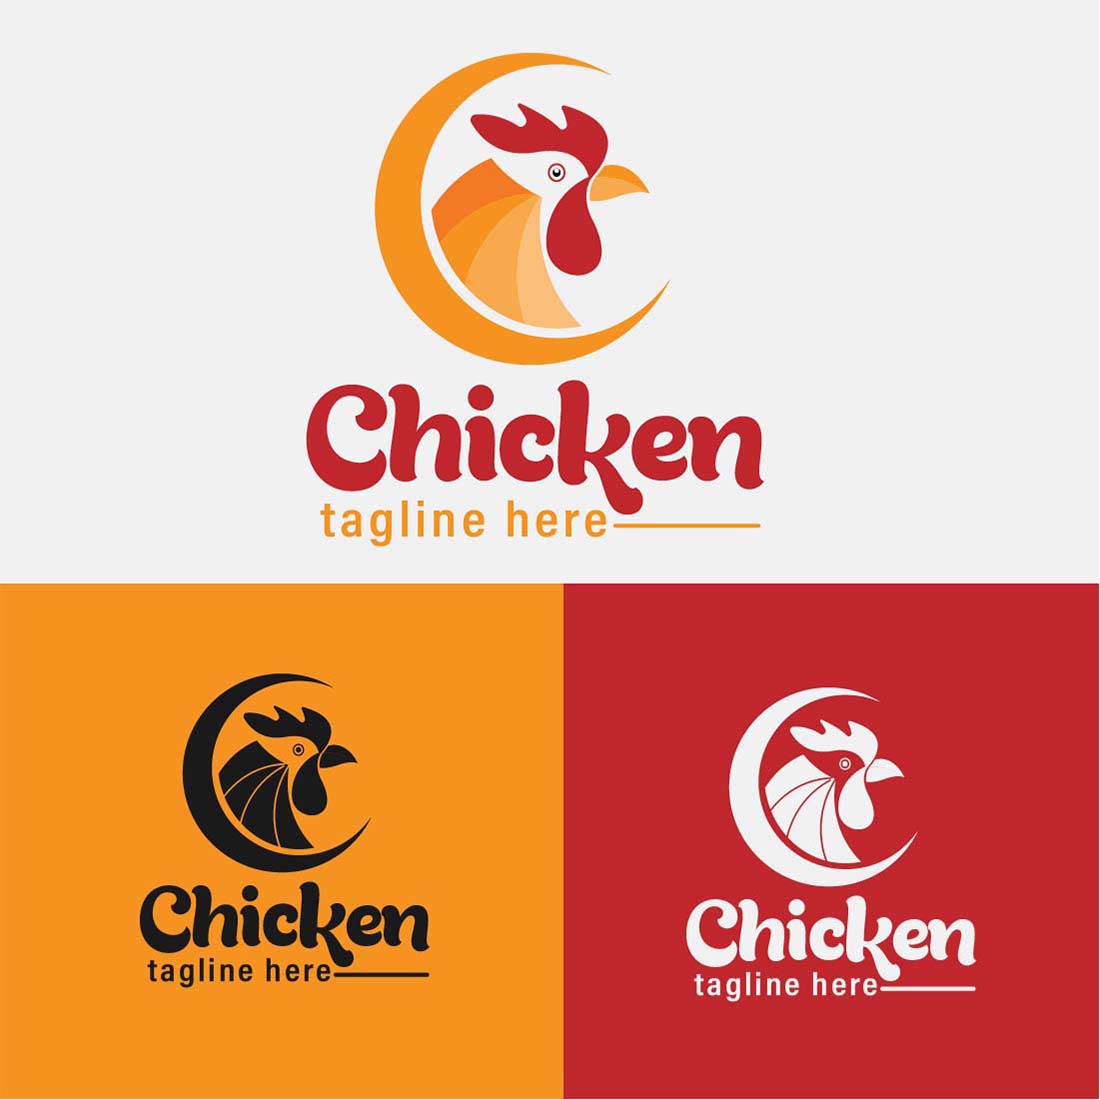 Restaurant Logo Design Template cover image.